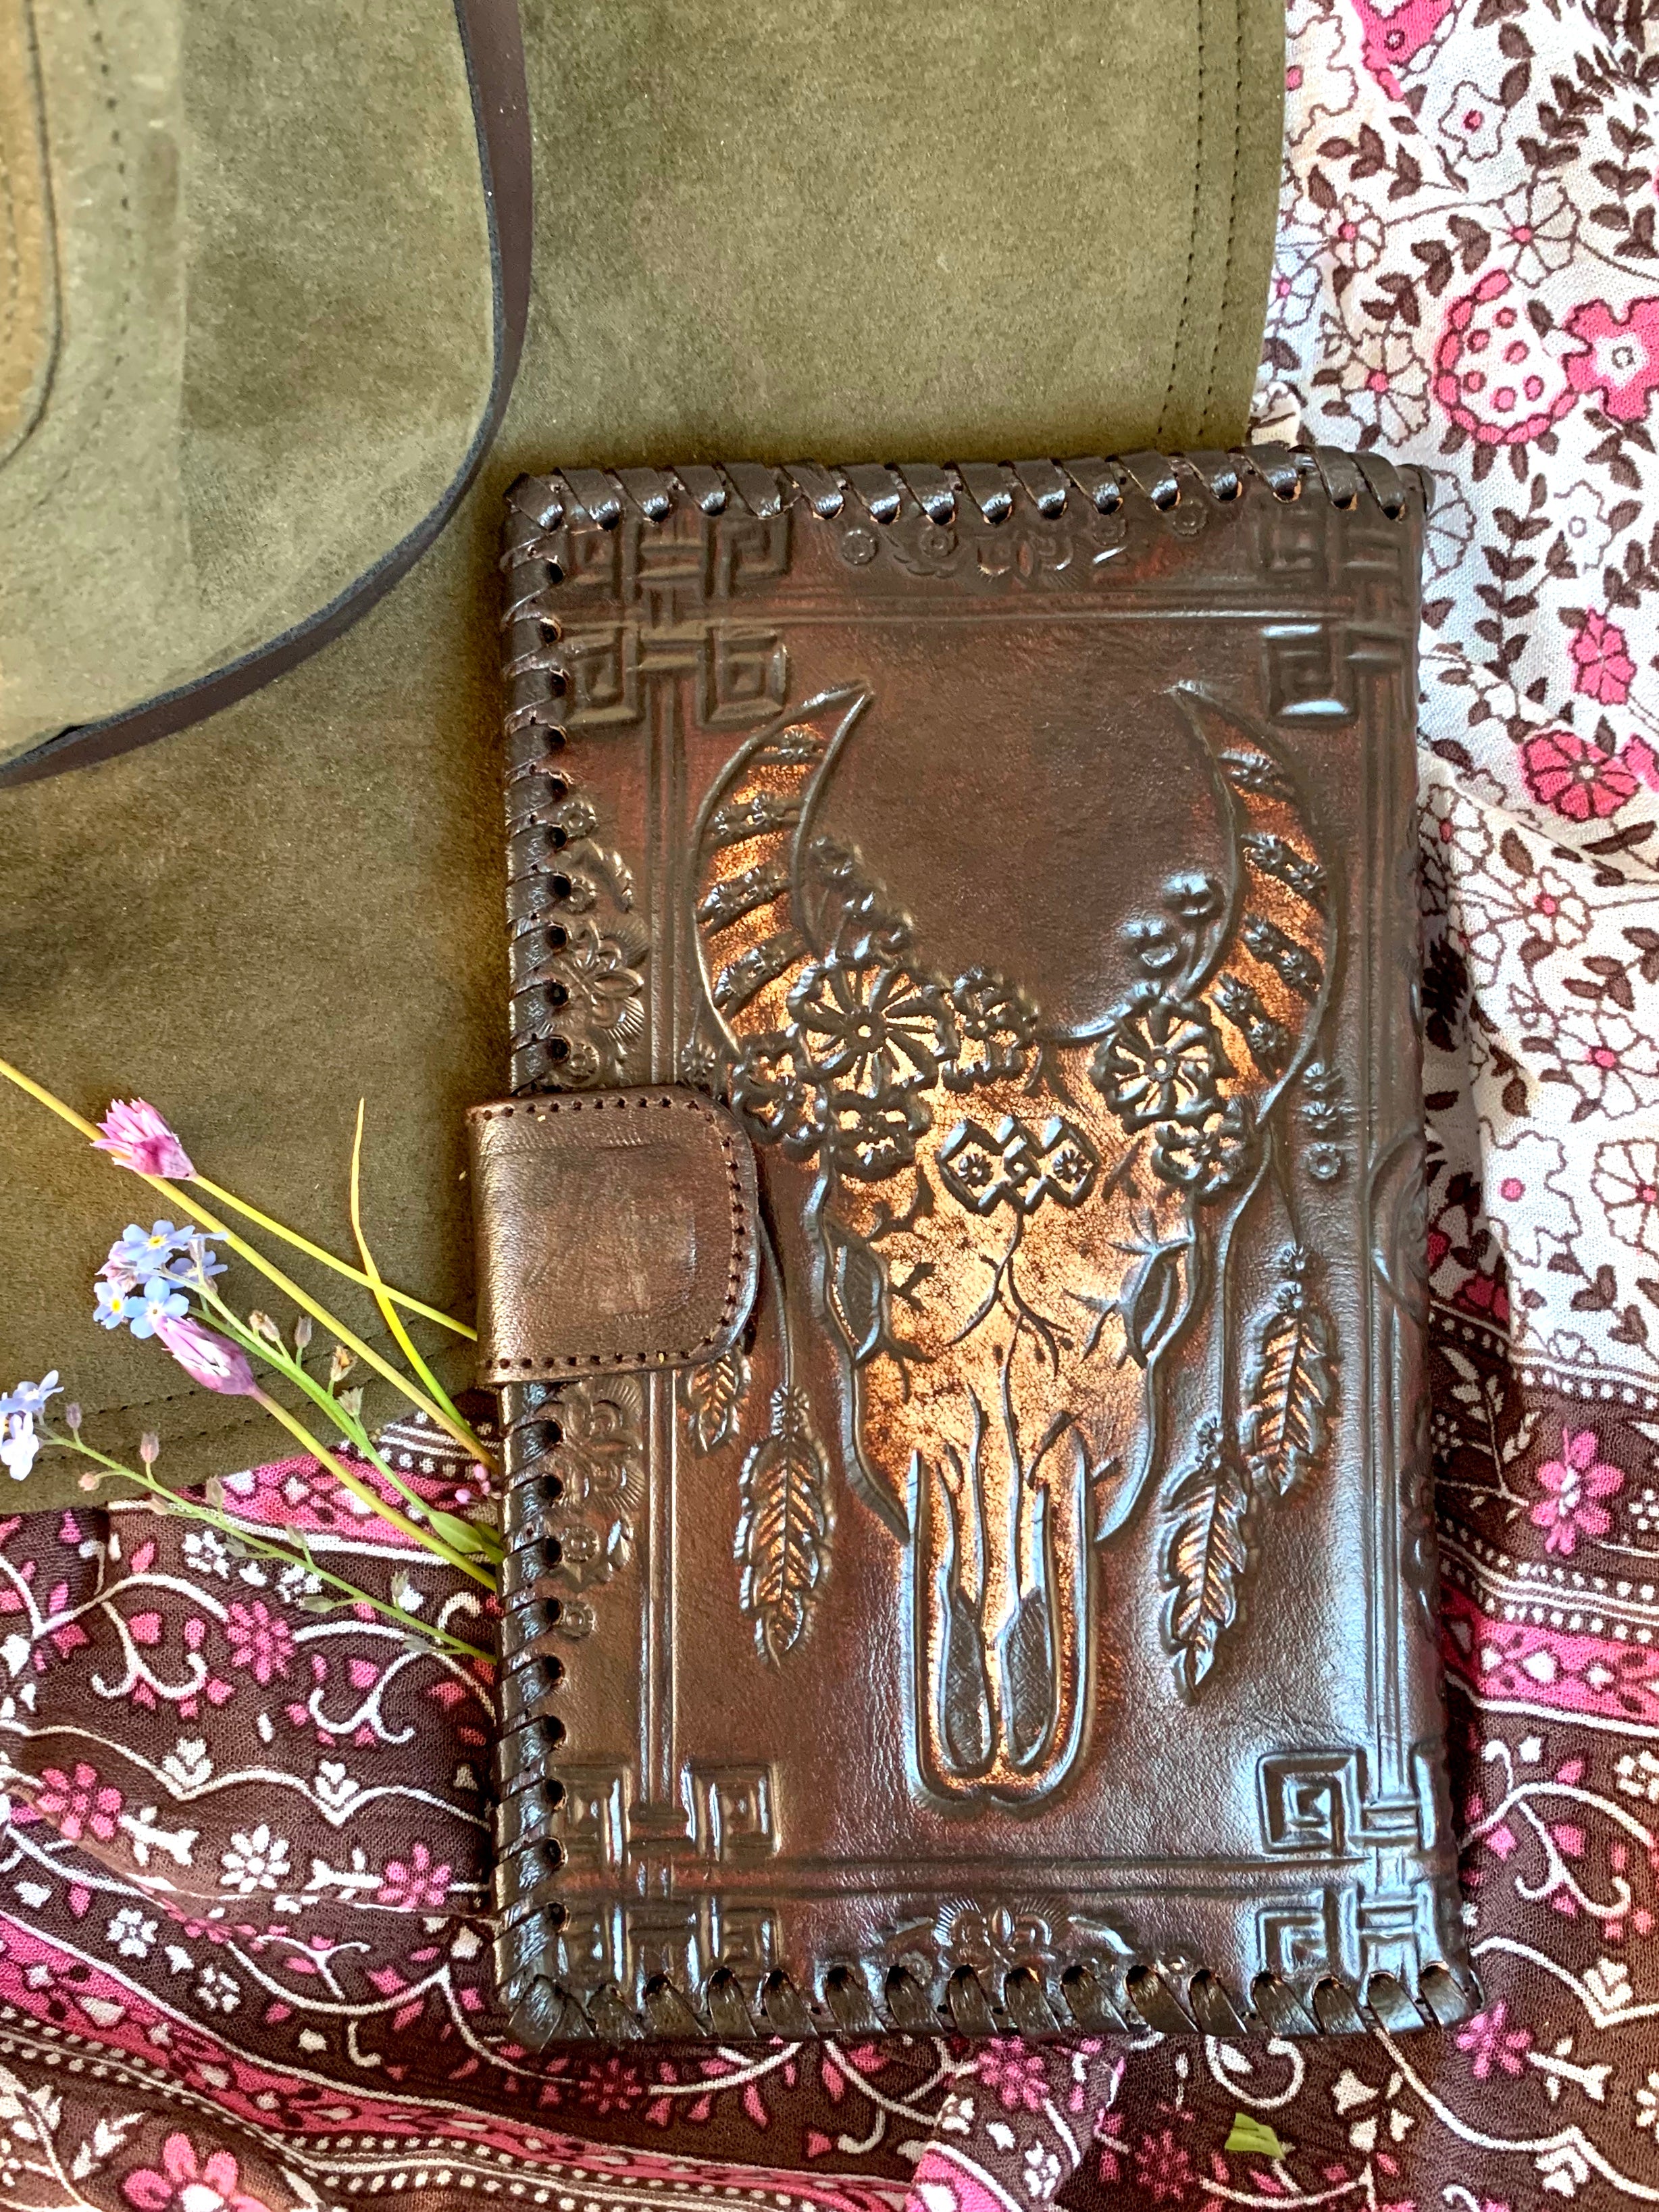 The gypsy Traveler Wallet